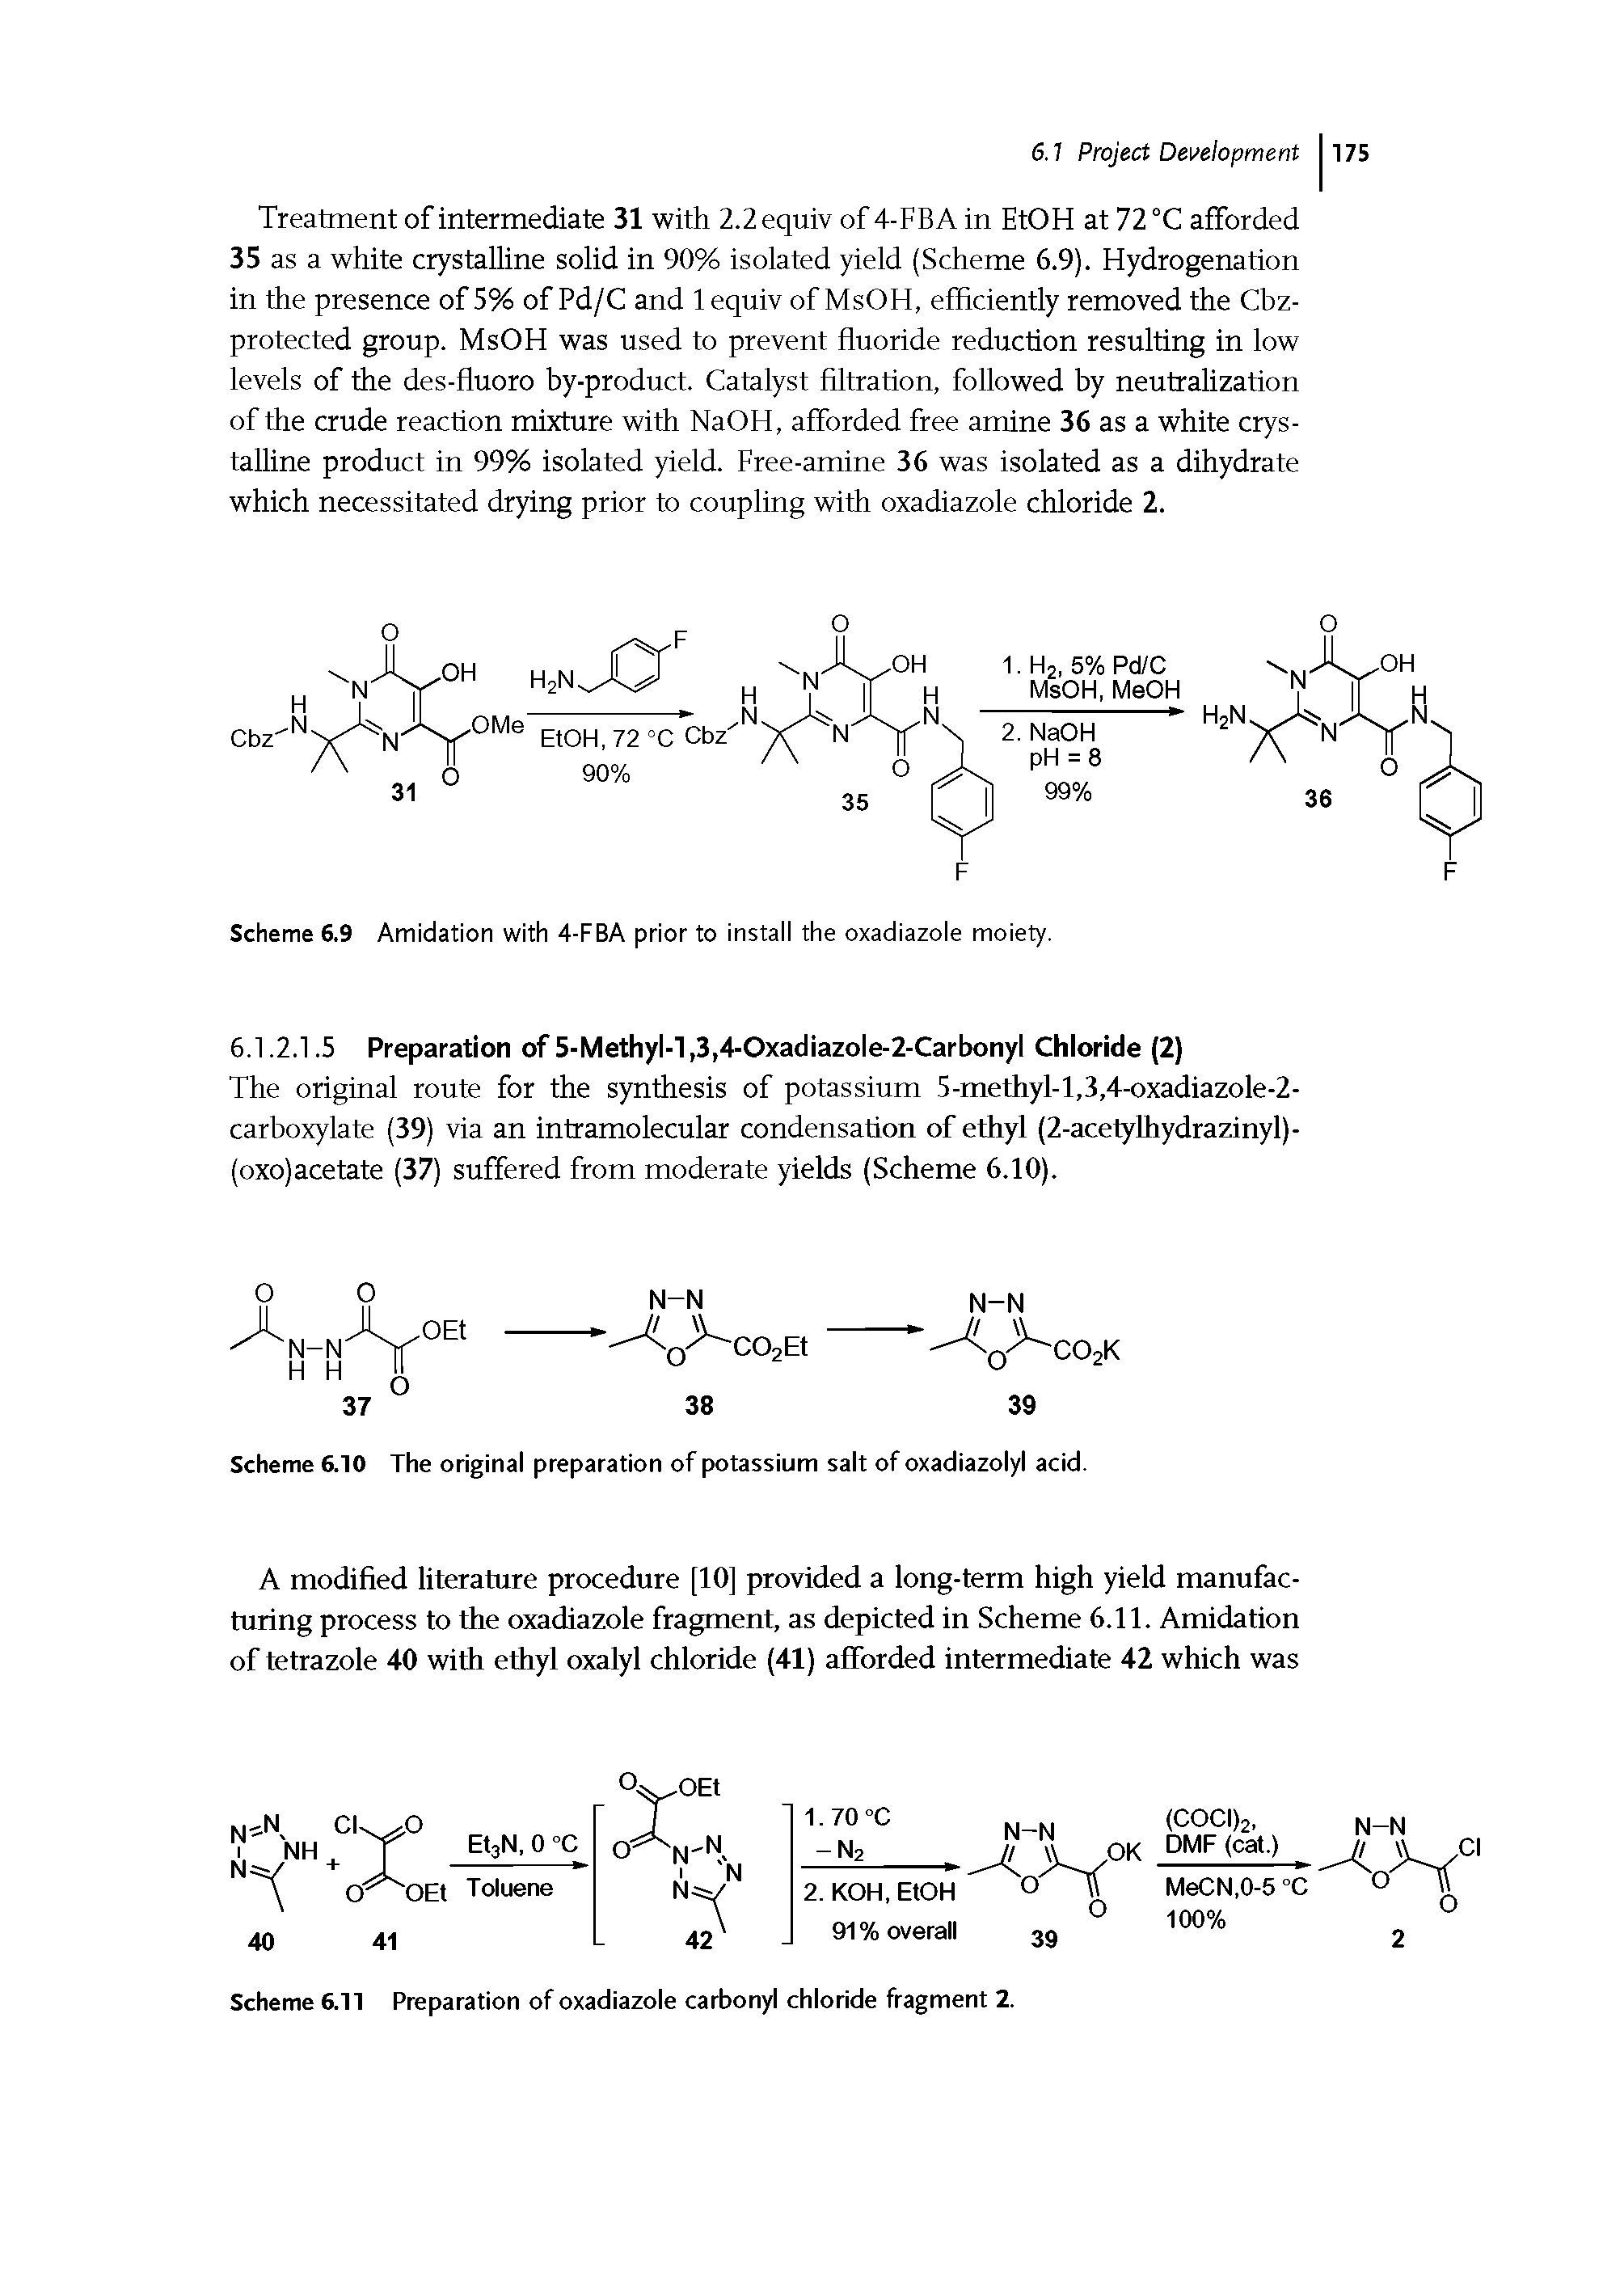 Scheme 6.11 Preparation of oxadiazole carbonyl chloride fragment 2.